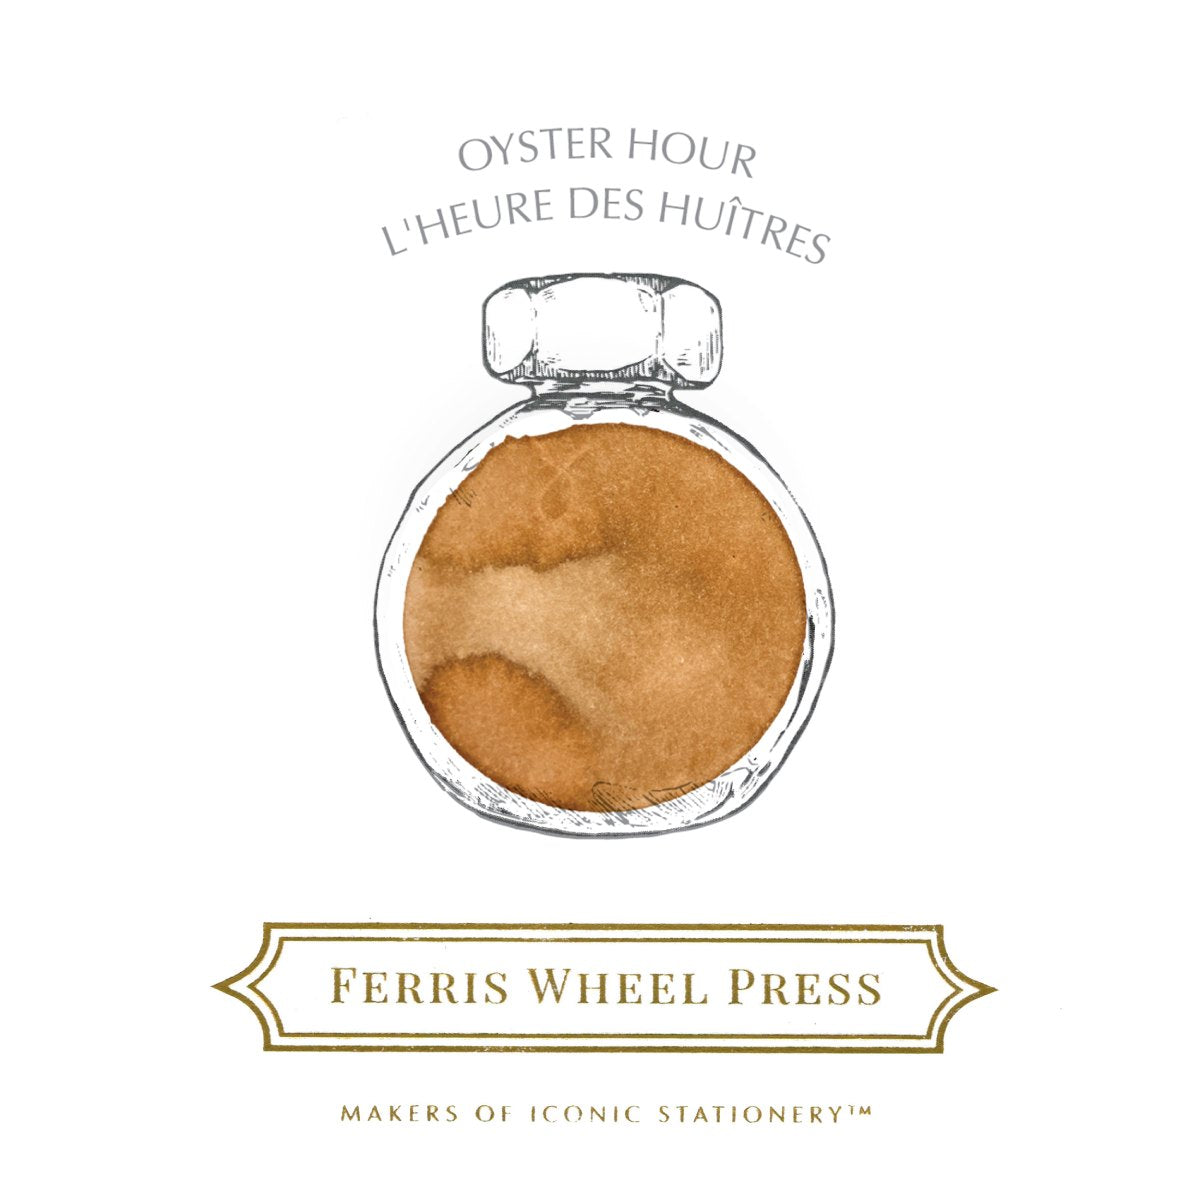 Ferris Wheel Press - Oyster Hour